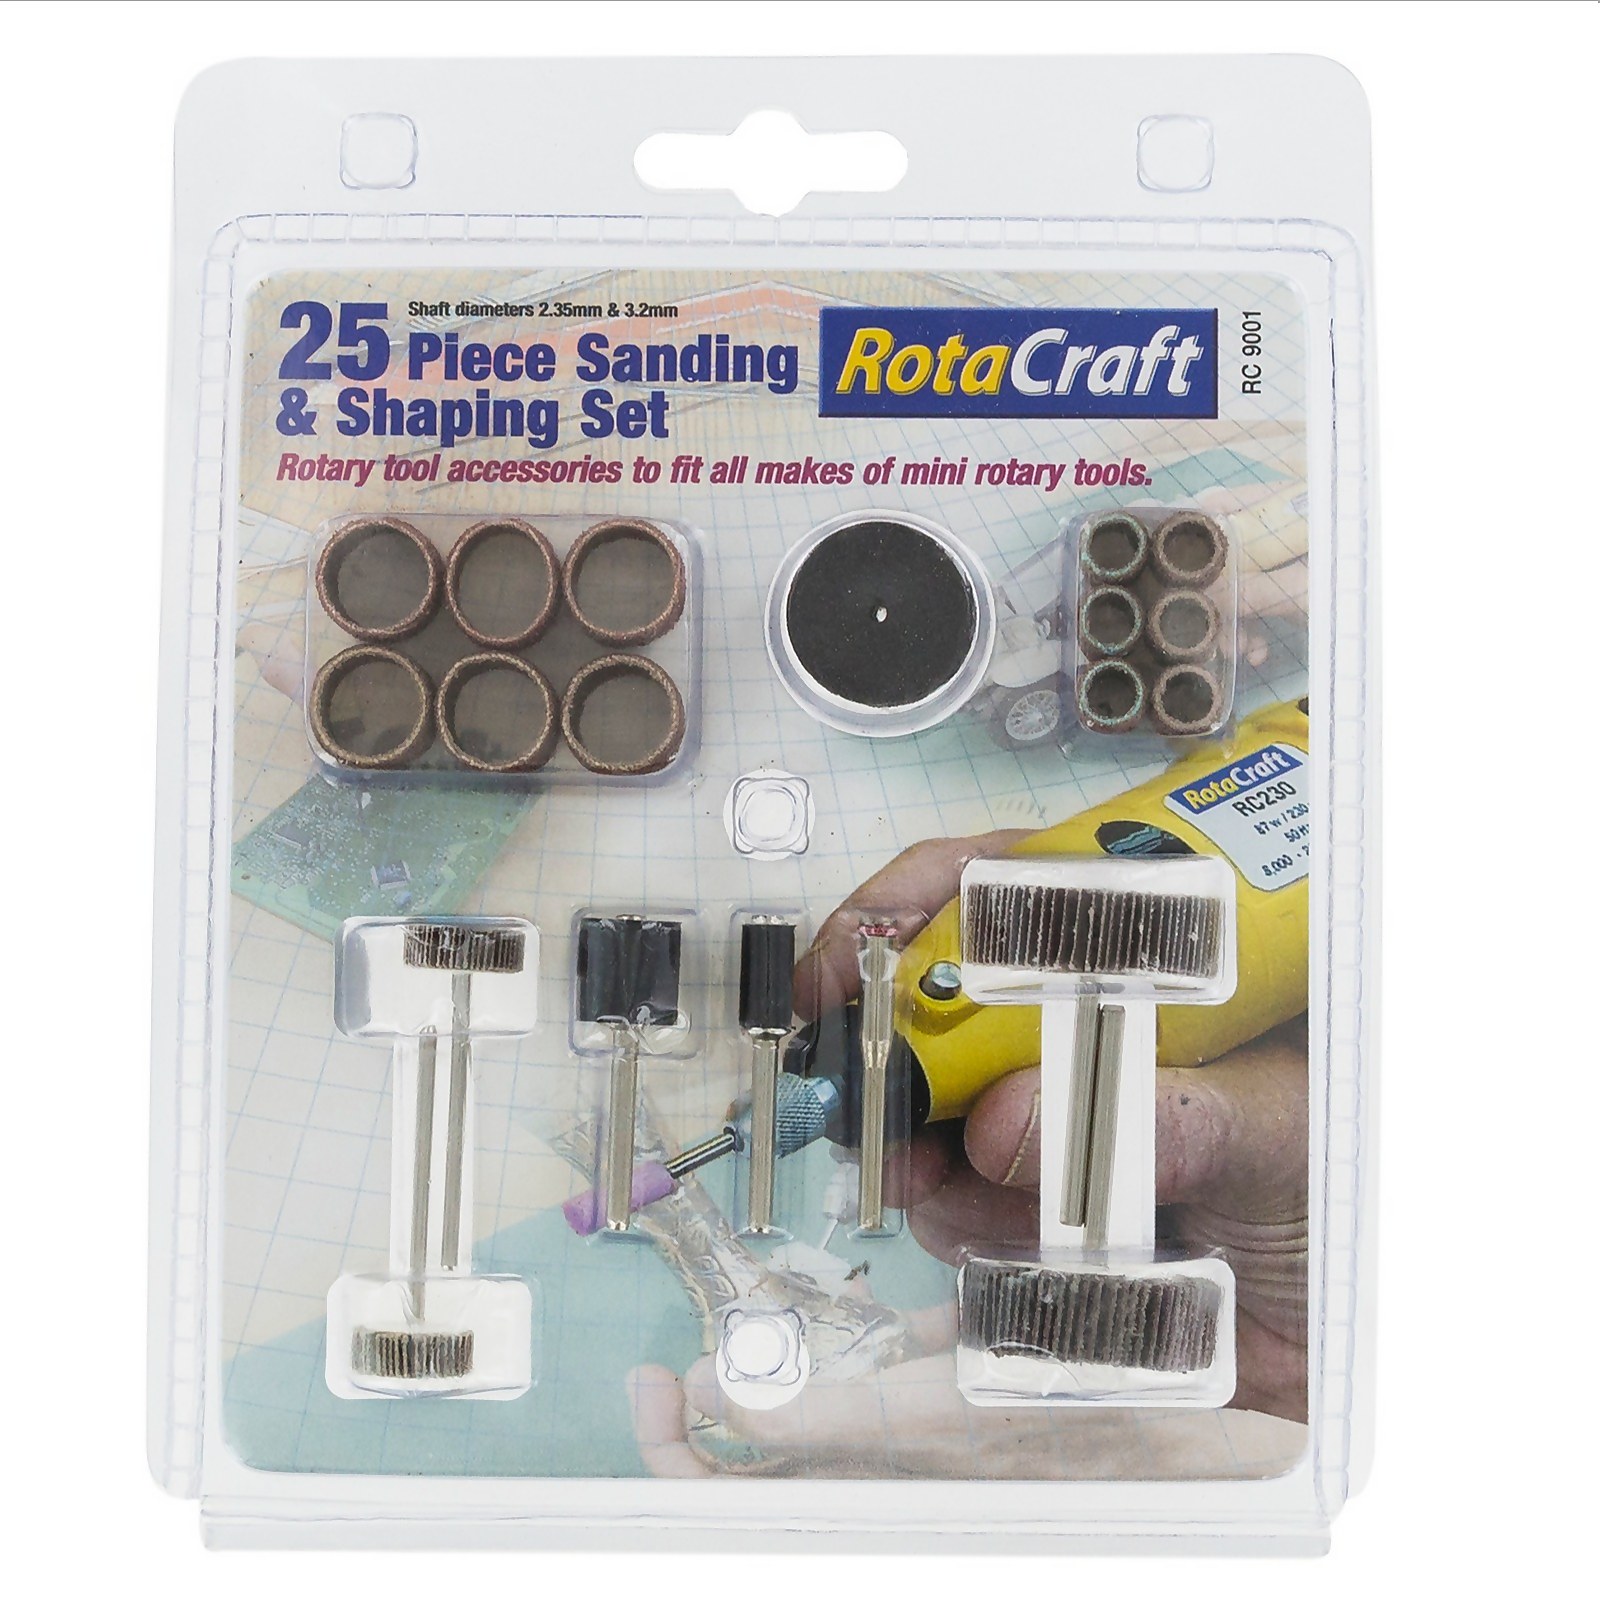 Rotacraft Rotary Tool 25 Piece Sanding & Shaping Set